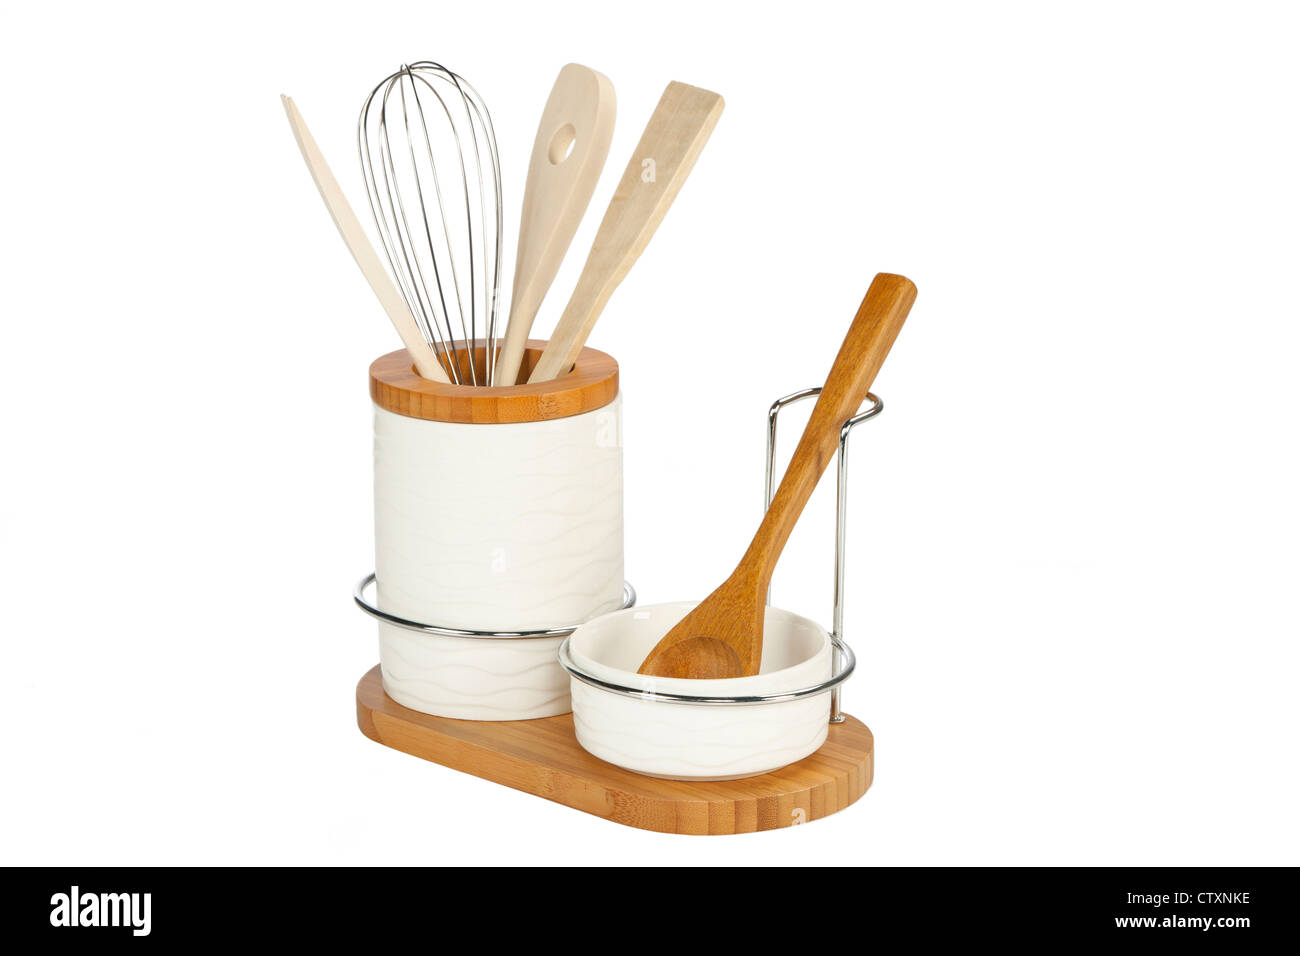 https://c8.alamy.com/comp/CTXNKE/kitchen-tools-wooden-cutlery-in-ceramic-pot-CTXNKE.jpg